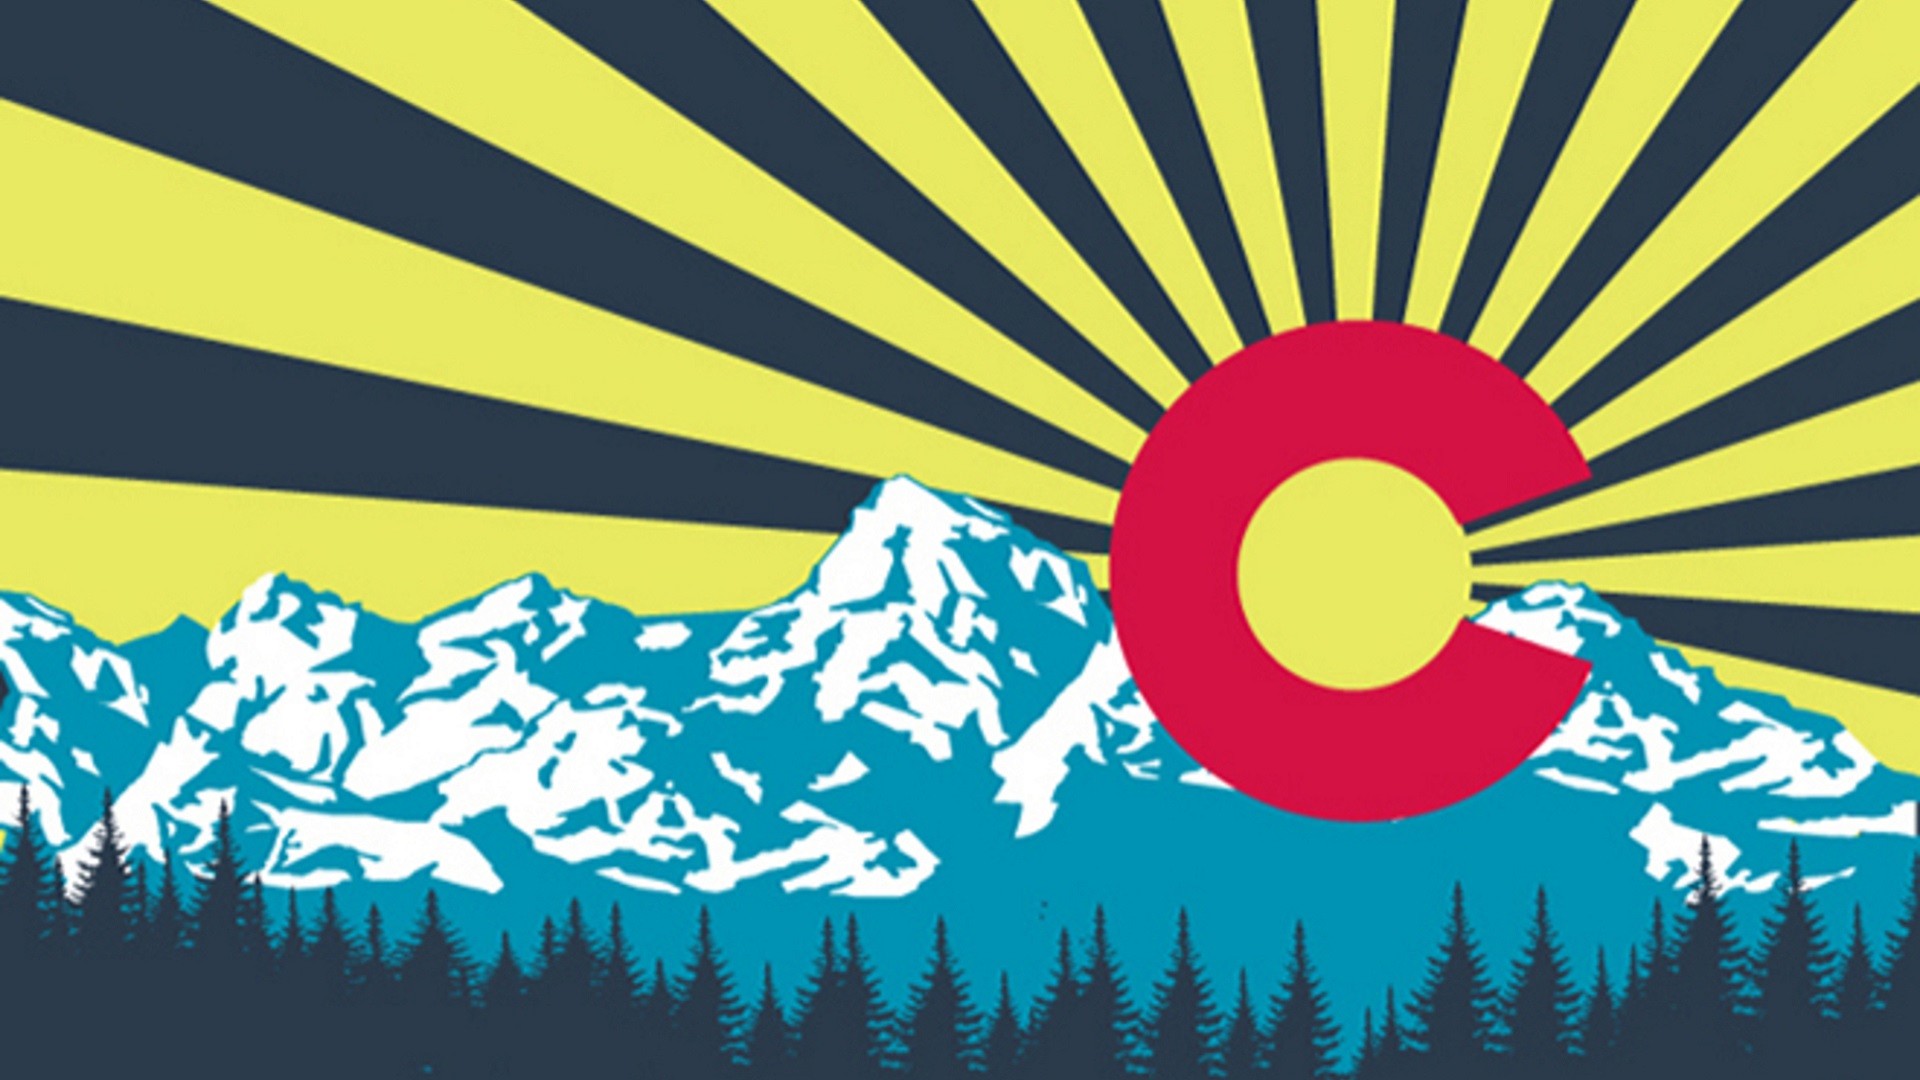 1920x1080, Colorado Flag Wallpaper 
 Data Id 129178 - Colorado C With Mountains - HD Wallpaper 